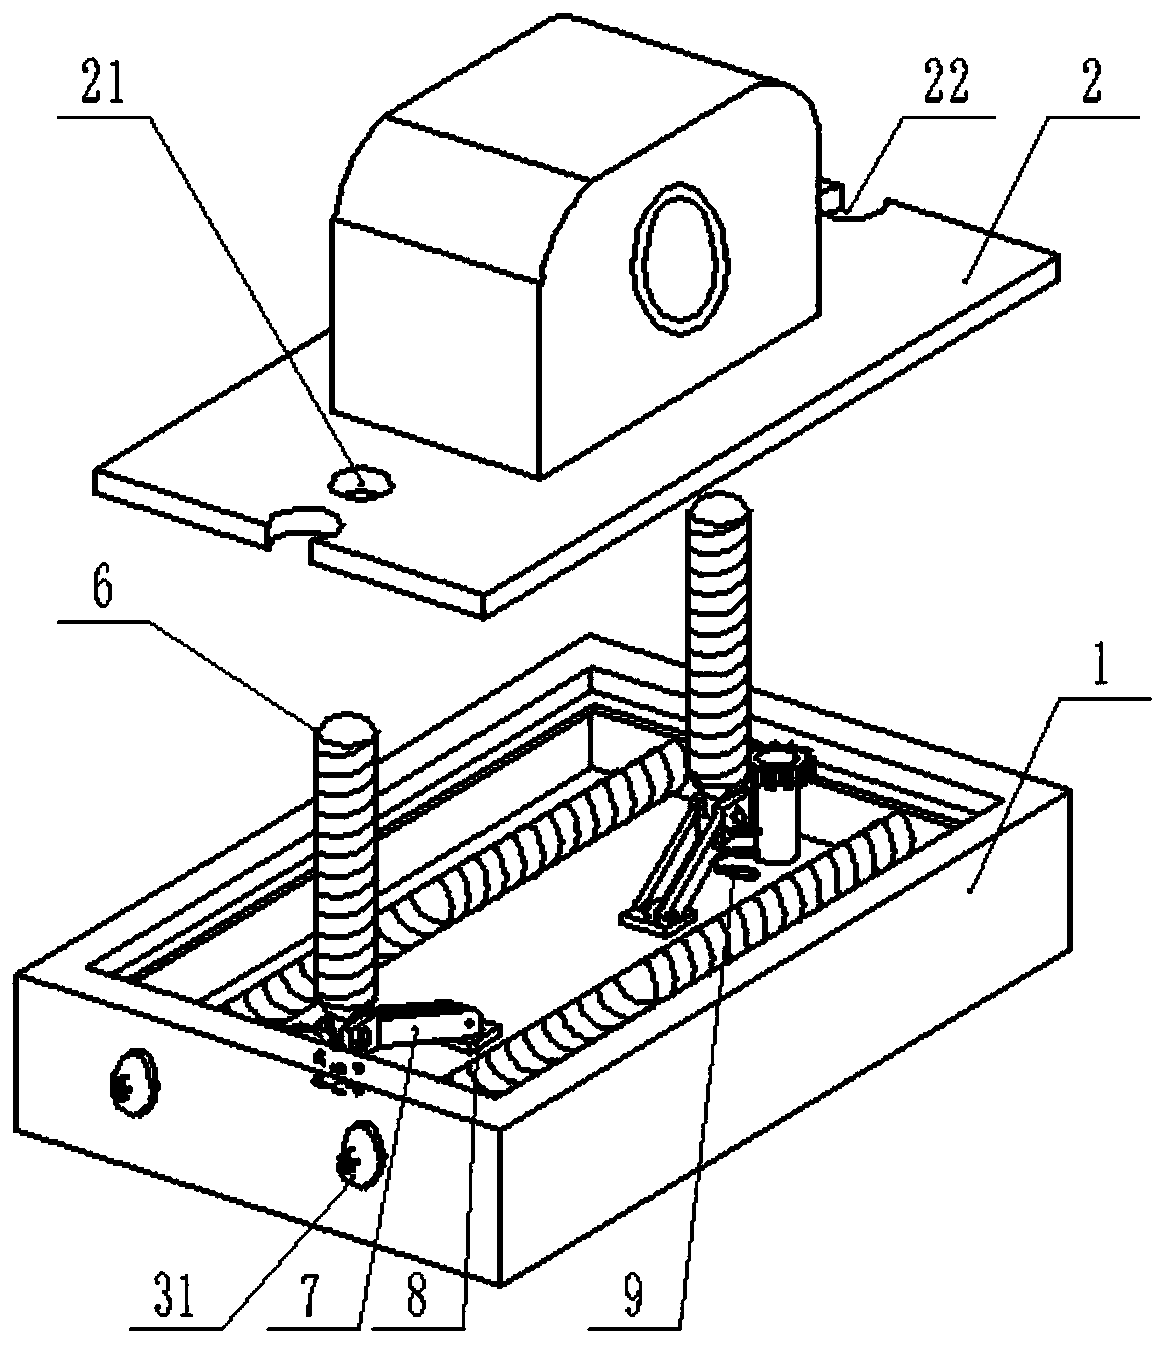 Bearing base horizontal positioning mechanism and horizontal positioning method